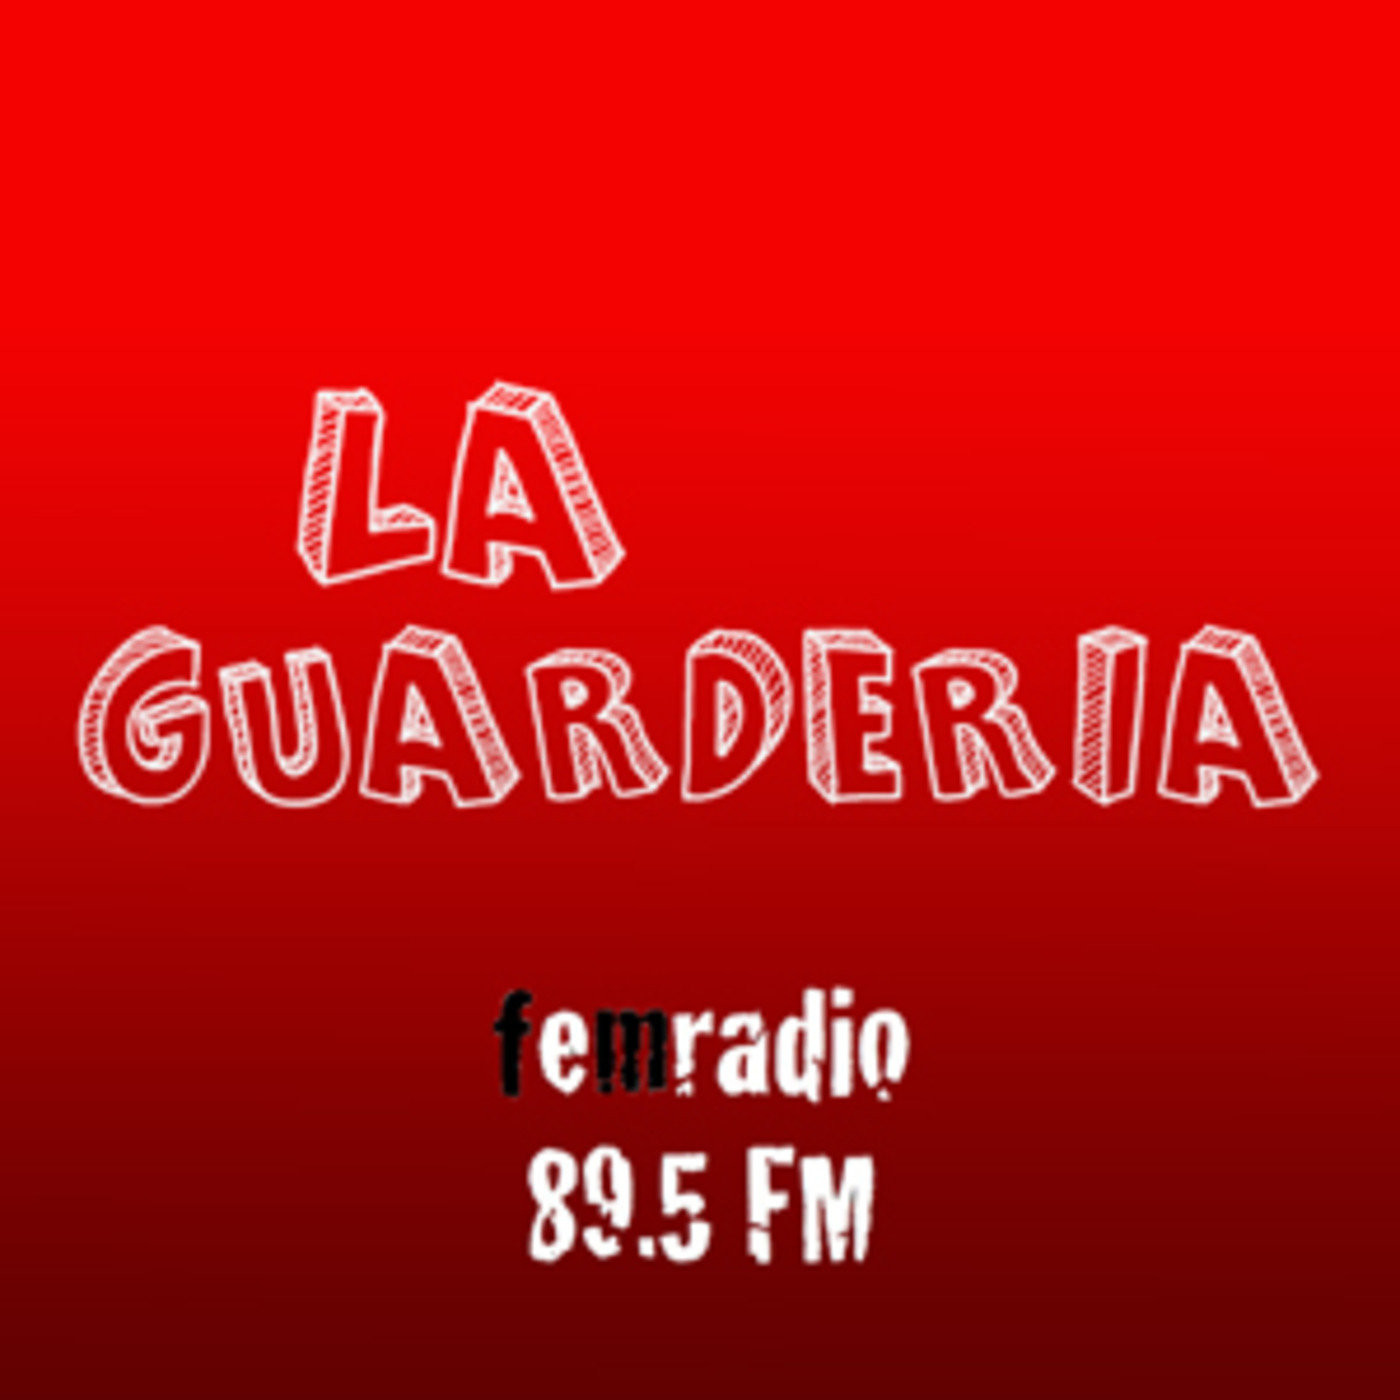 Podcast de LaGuarderiaFM